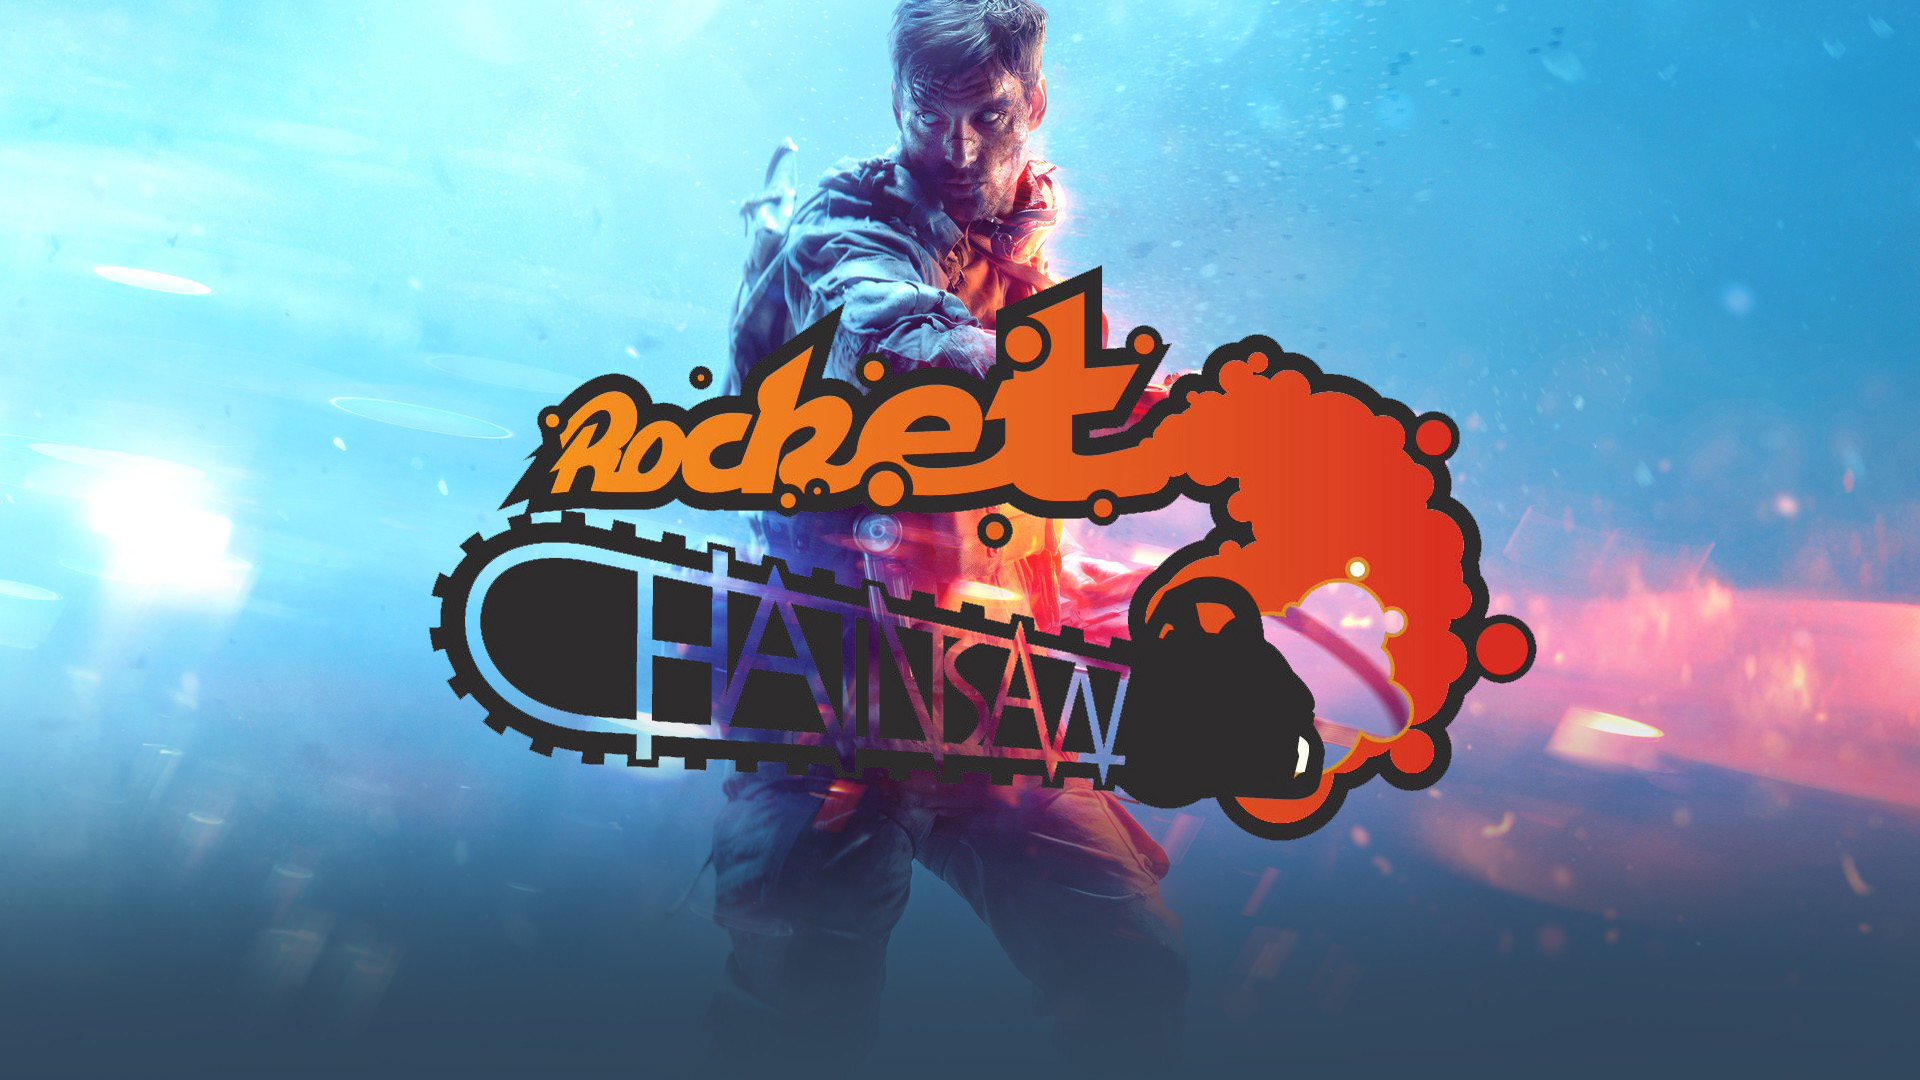 Rocket Chainsaw Battlefield V Logo